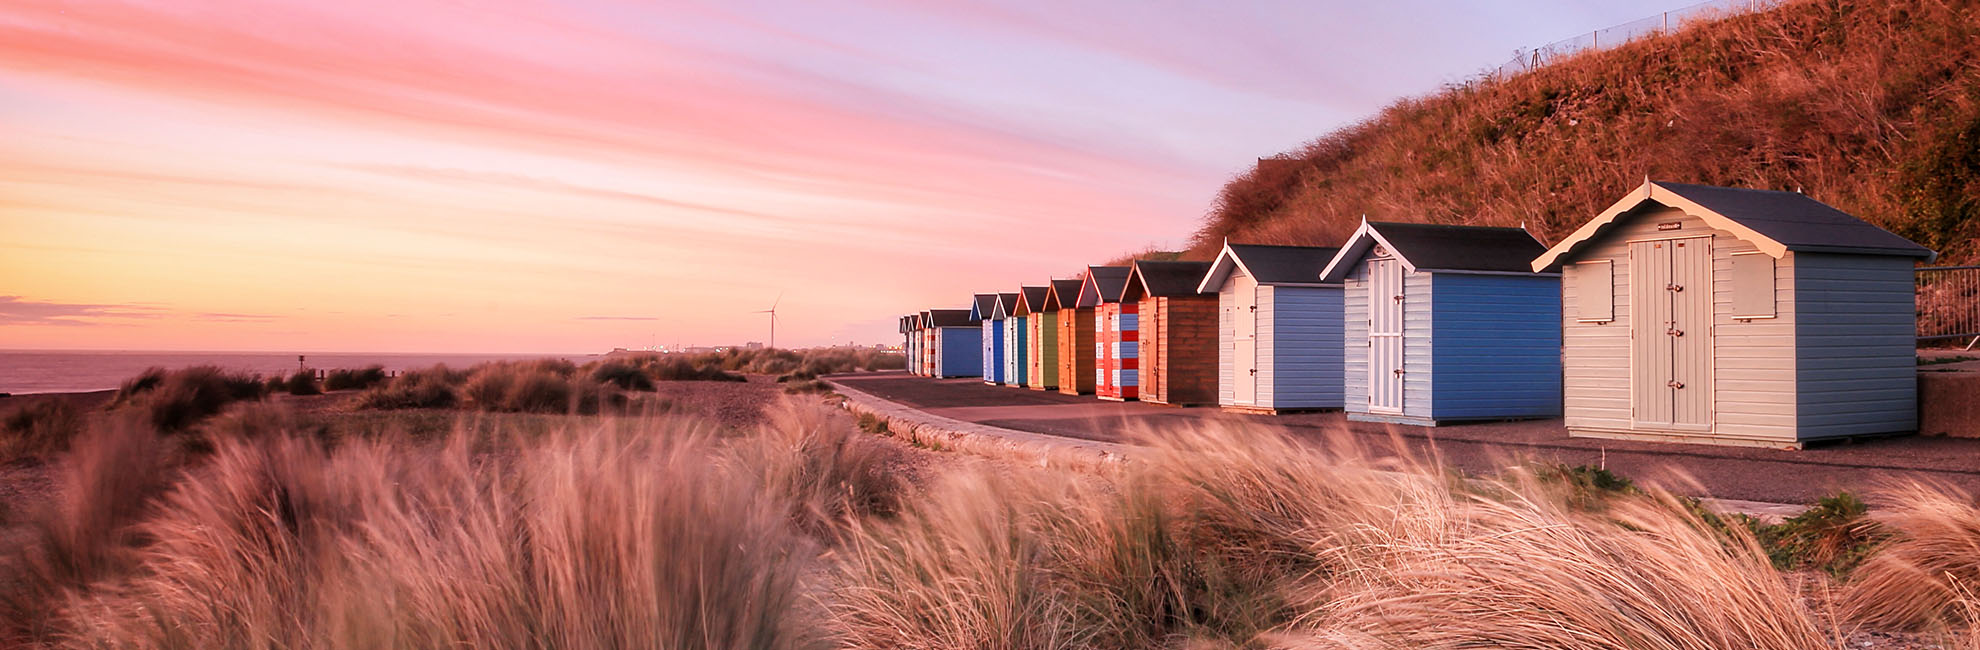 Beach huts at sunset on a beach in Suffolk